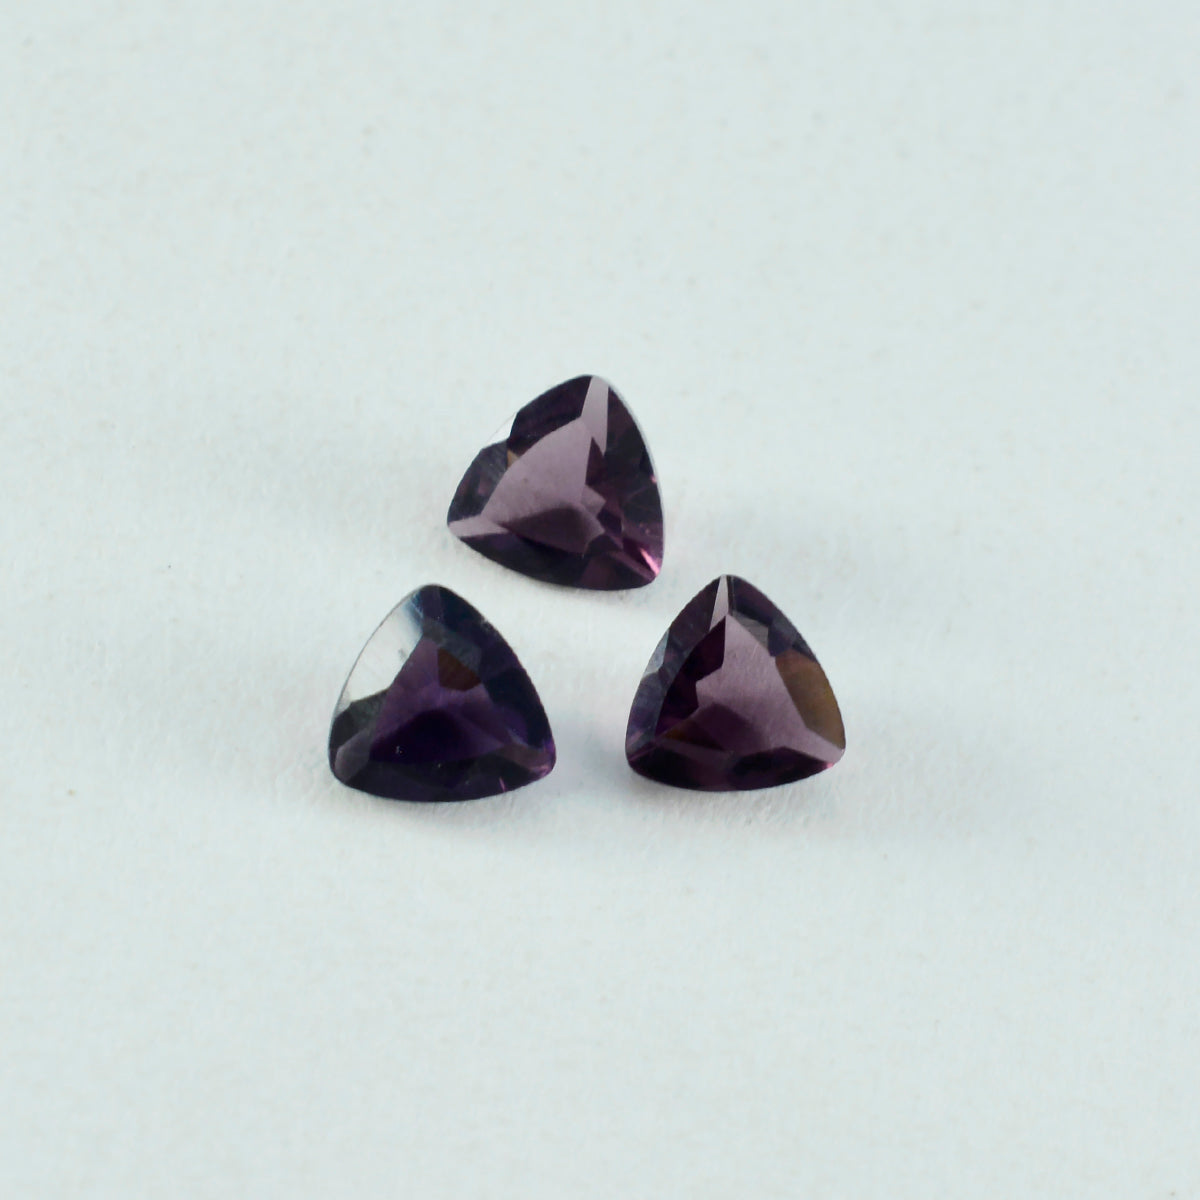 Riyogems 1PC Purple Amethyst CZ Faceted 9x9 mm Trillion Shape attractive Quality Gem